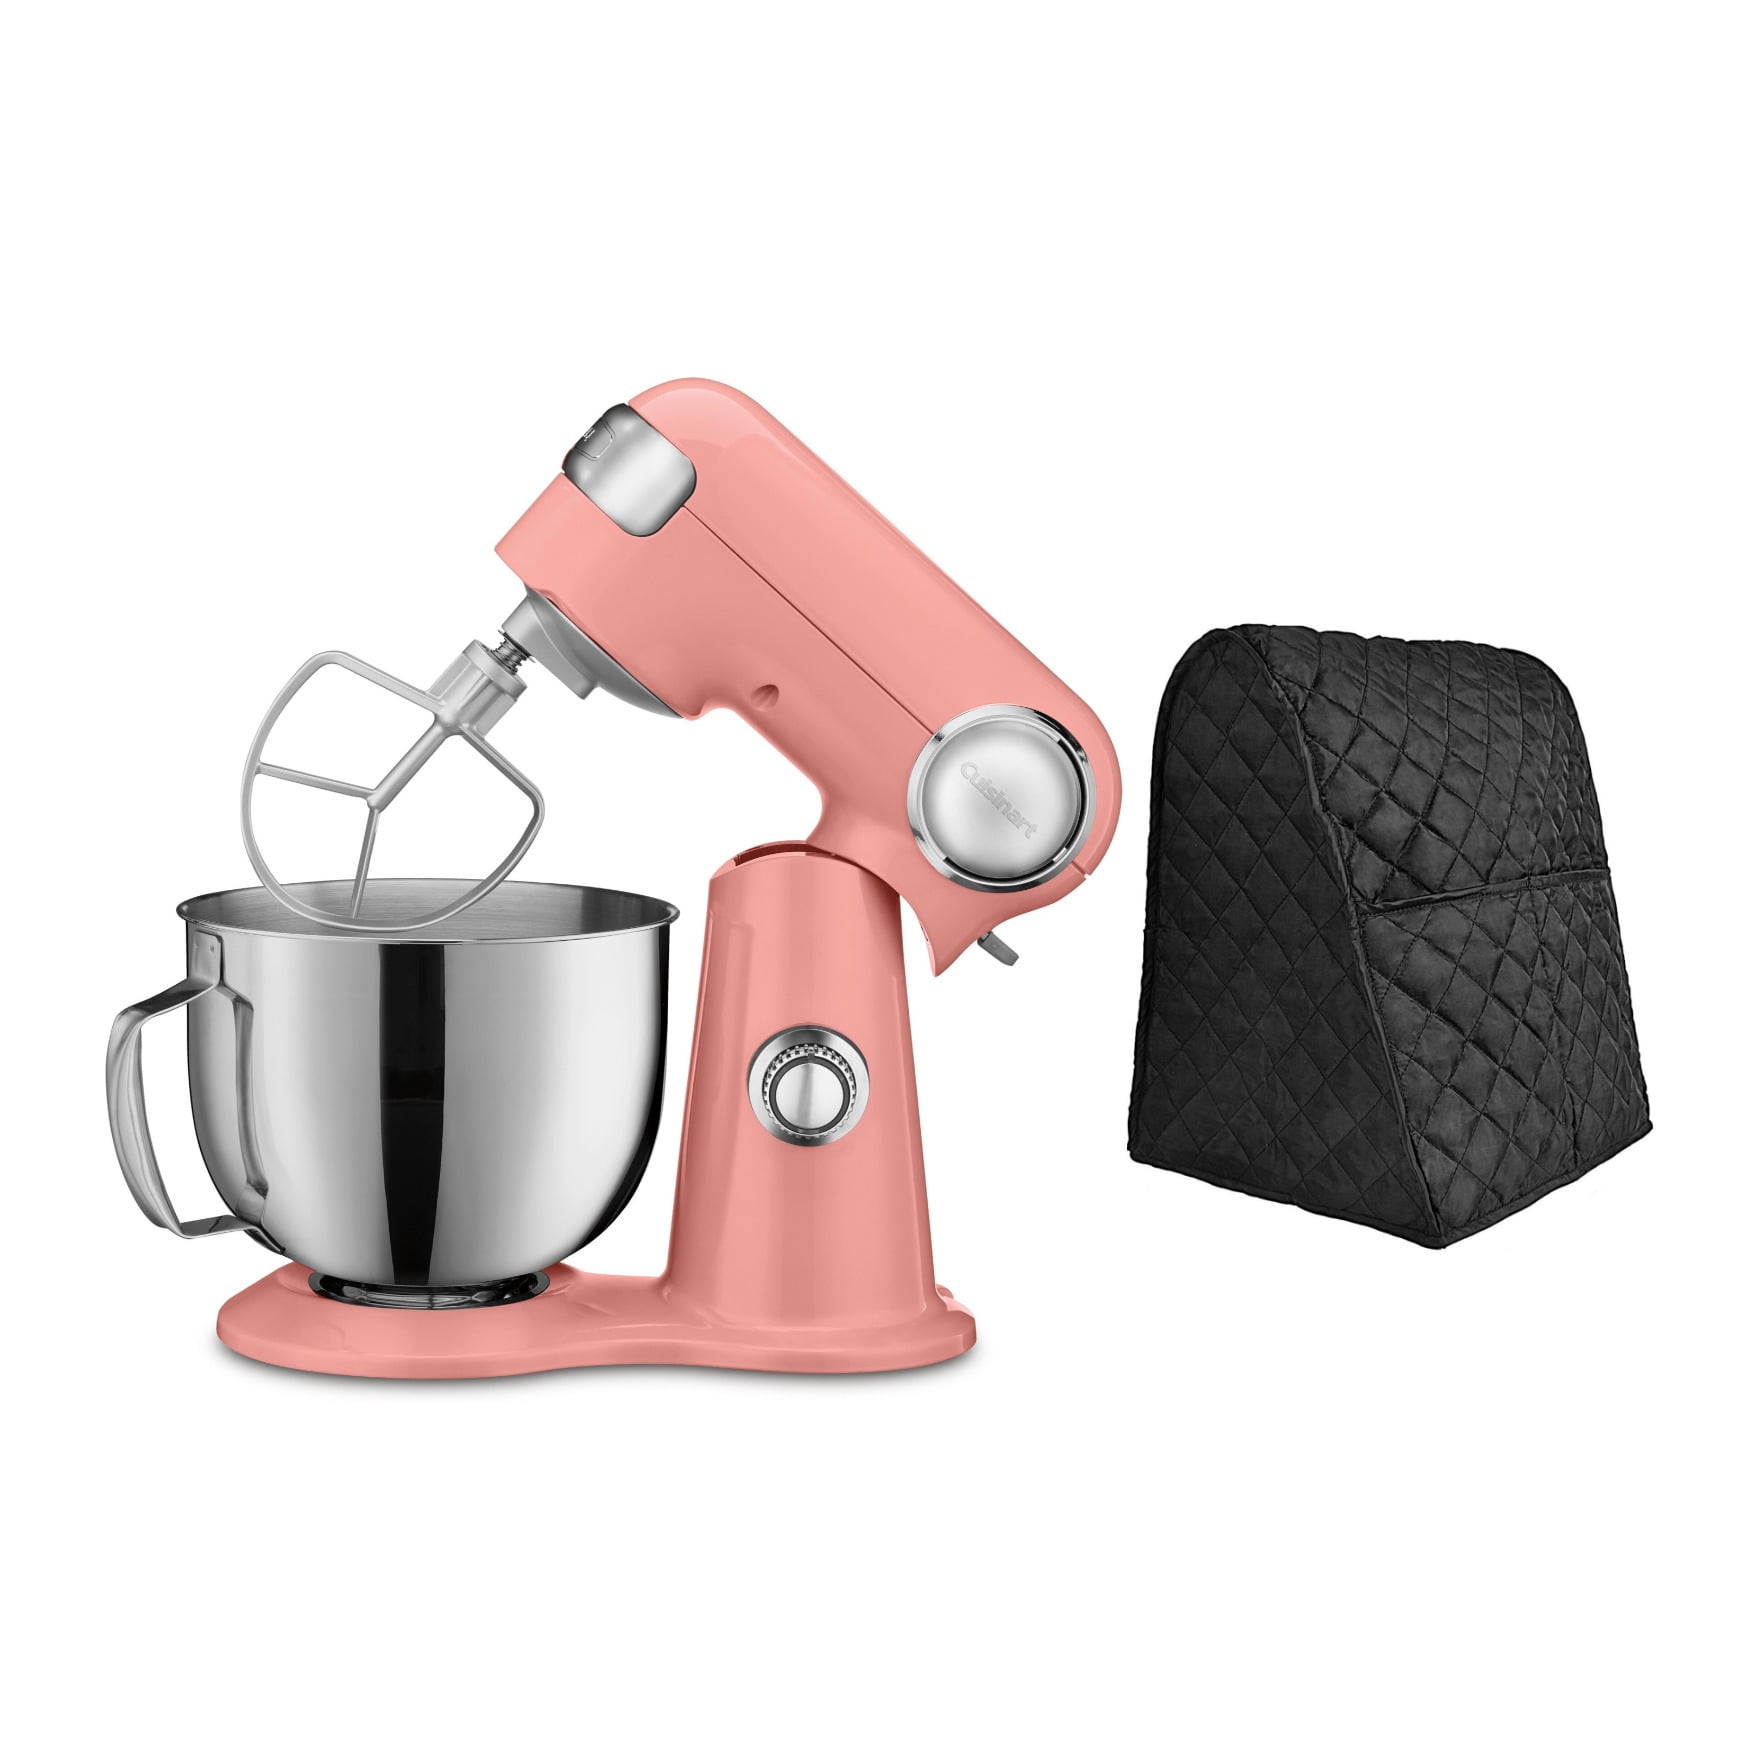 Plastic bag holder dispenser retro kitchen appliance mixer blender coffee pot